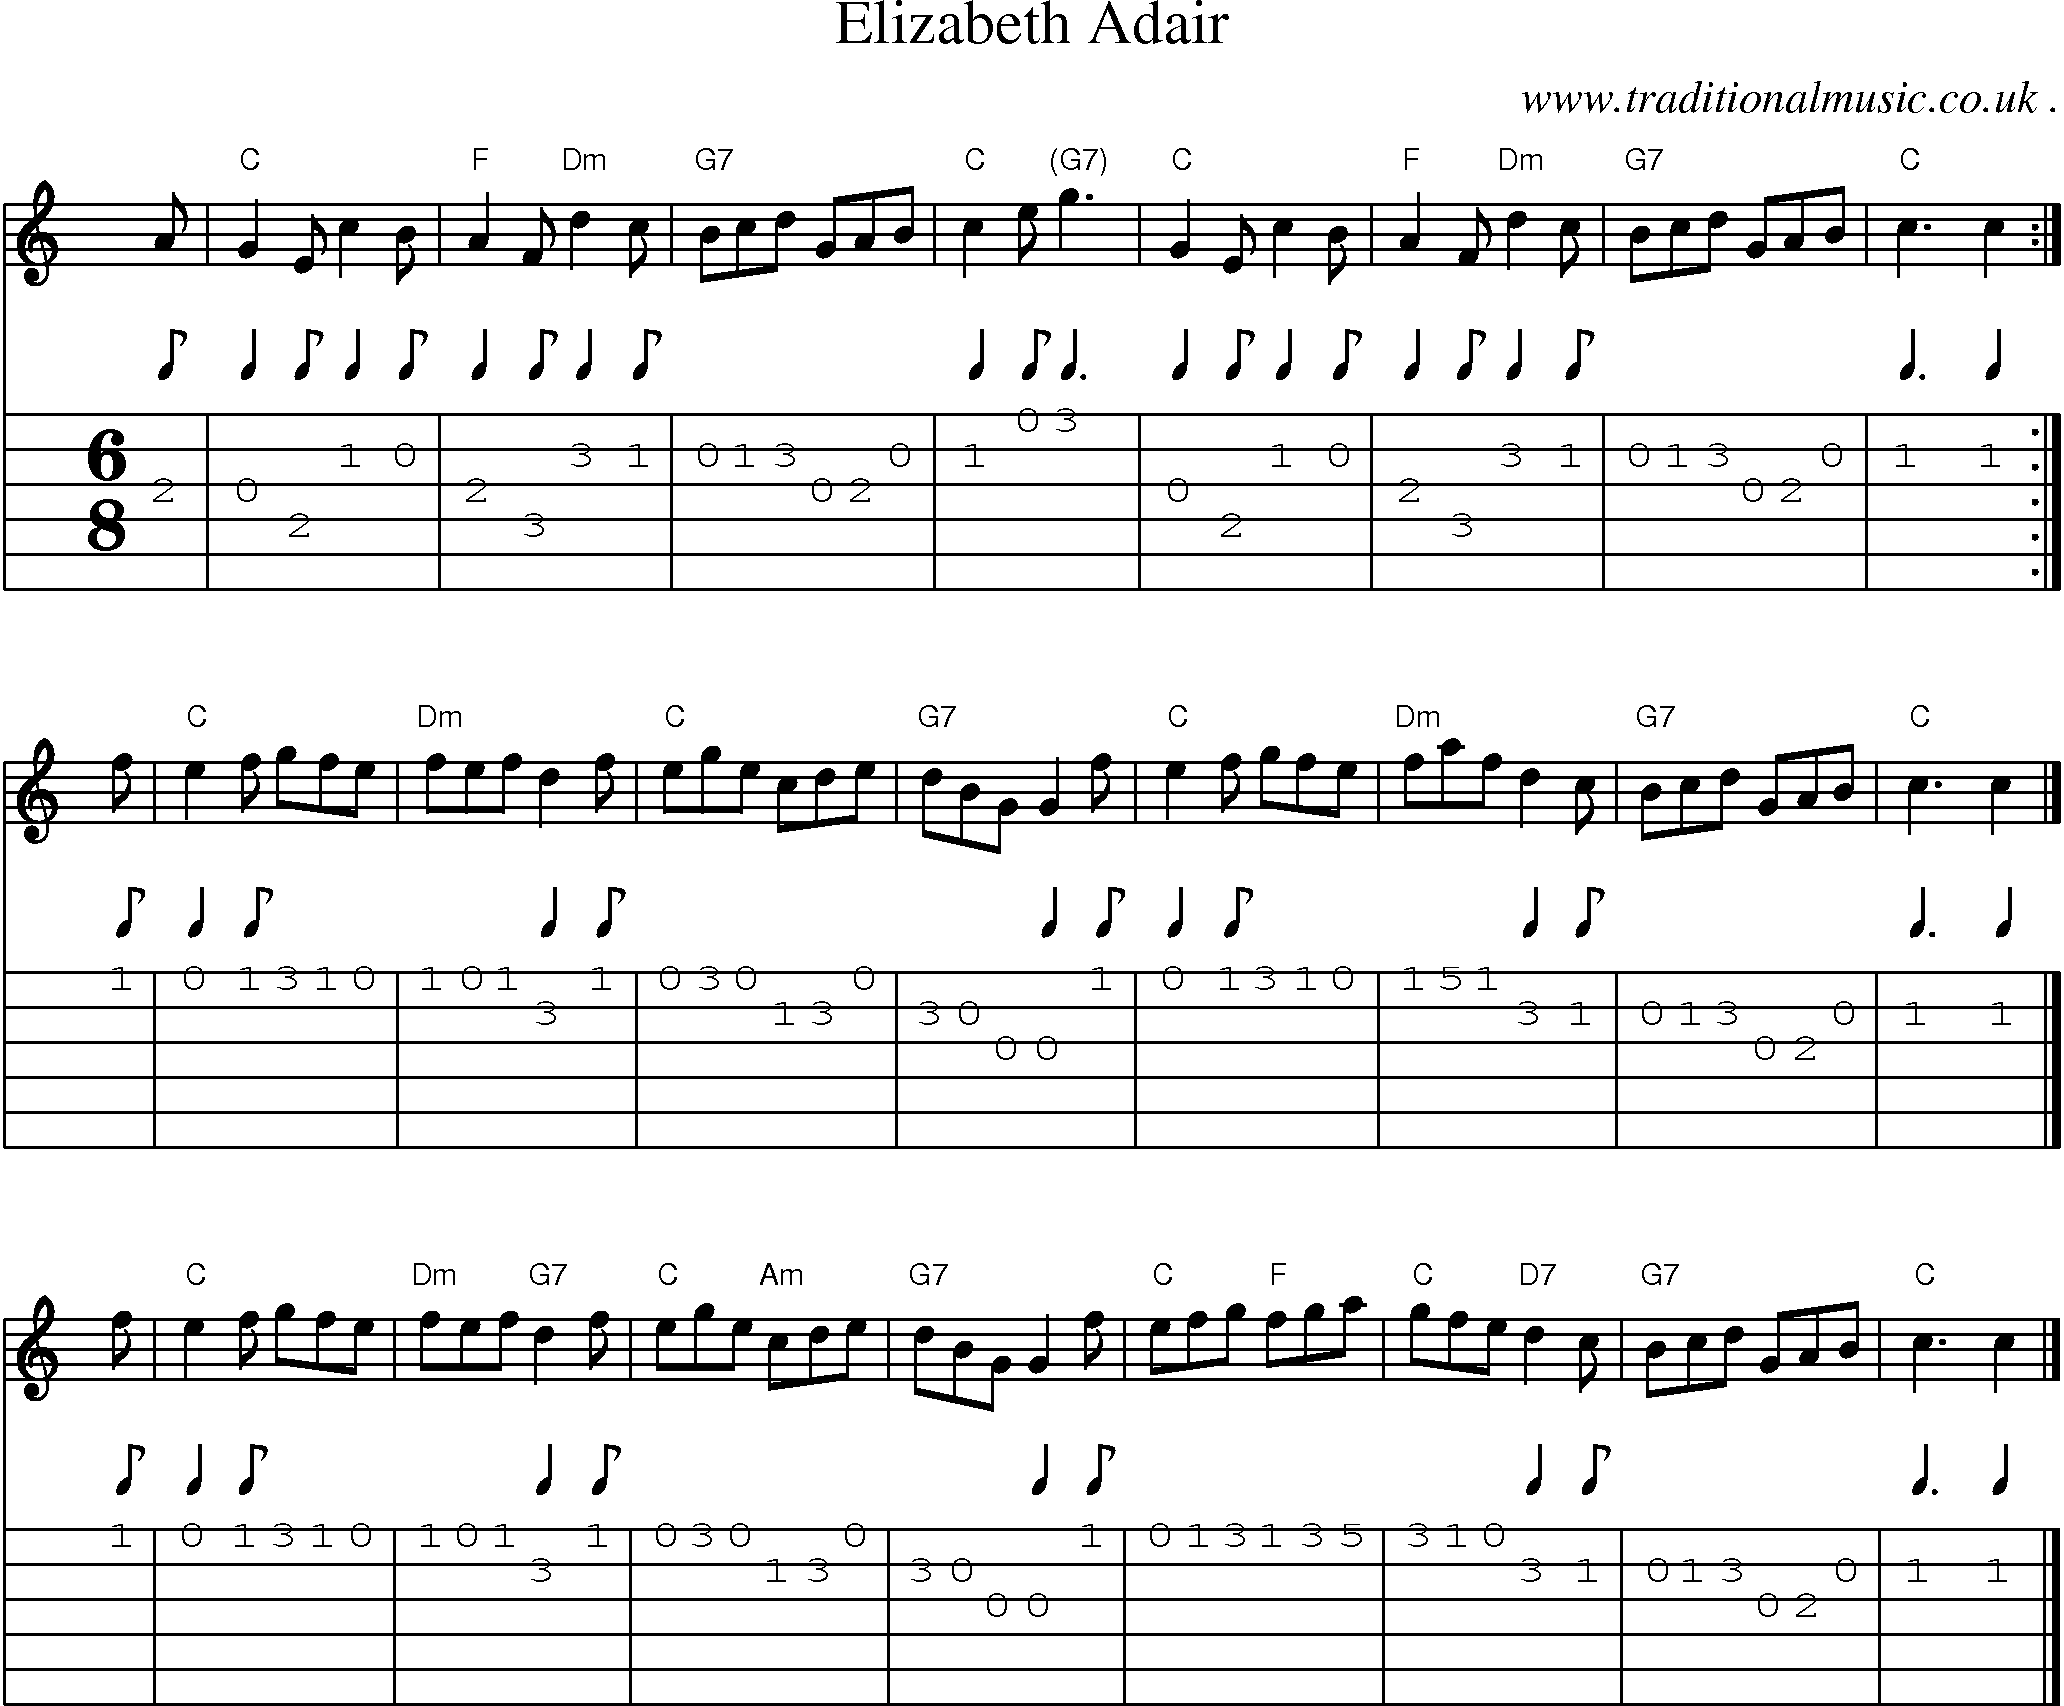 Sheet-music  score, Chords and Guitar Tabs for Elizabeth Adair